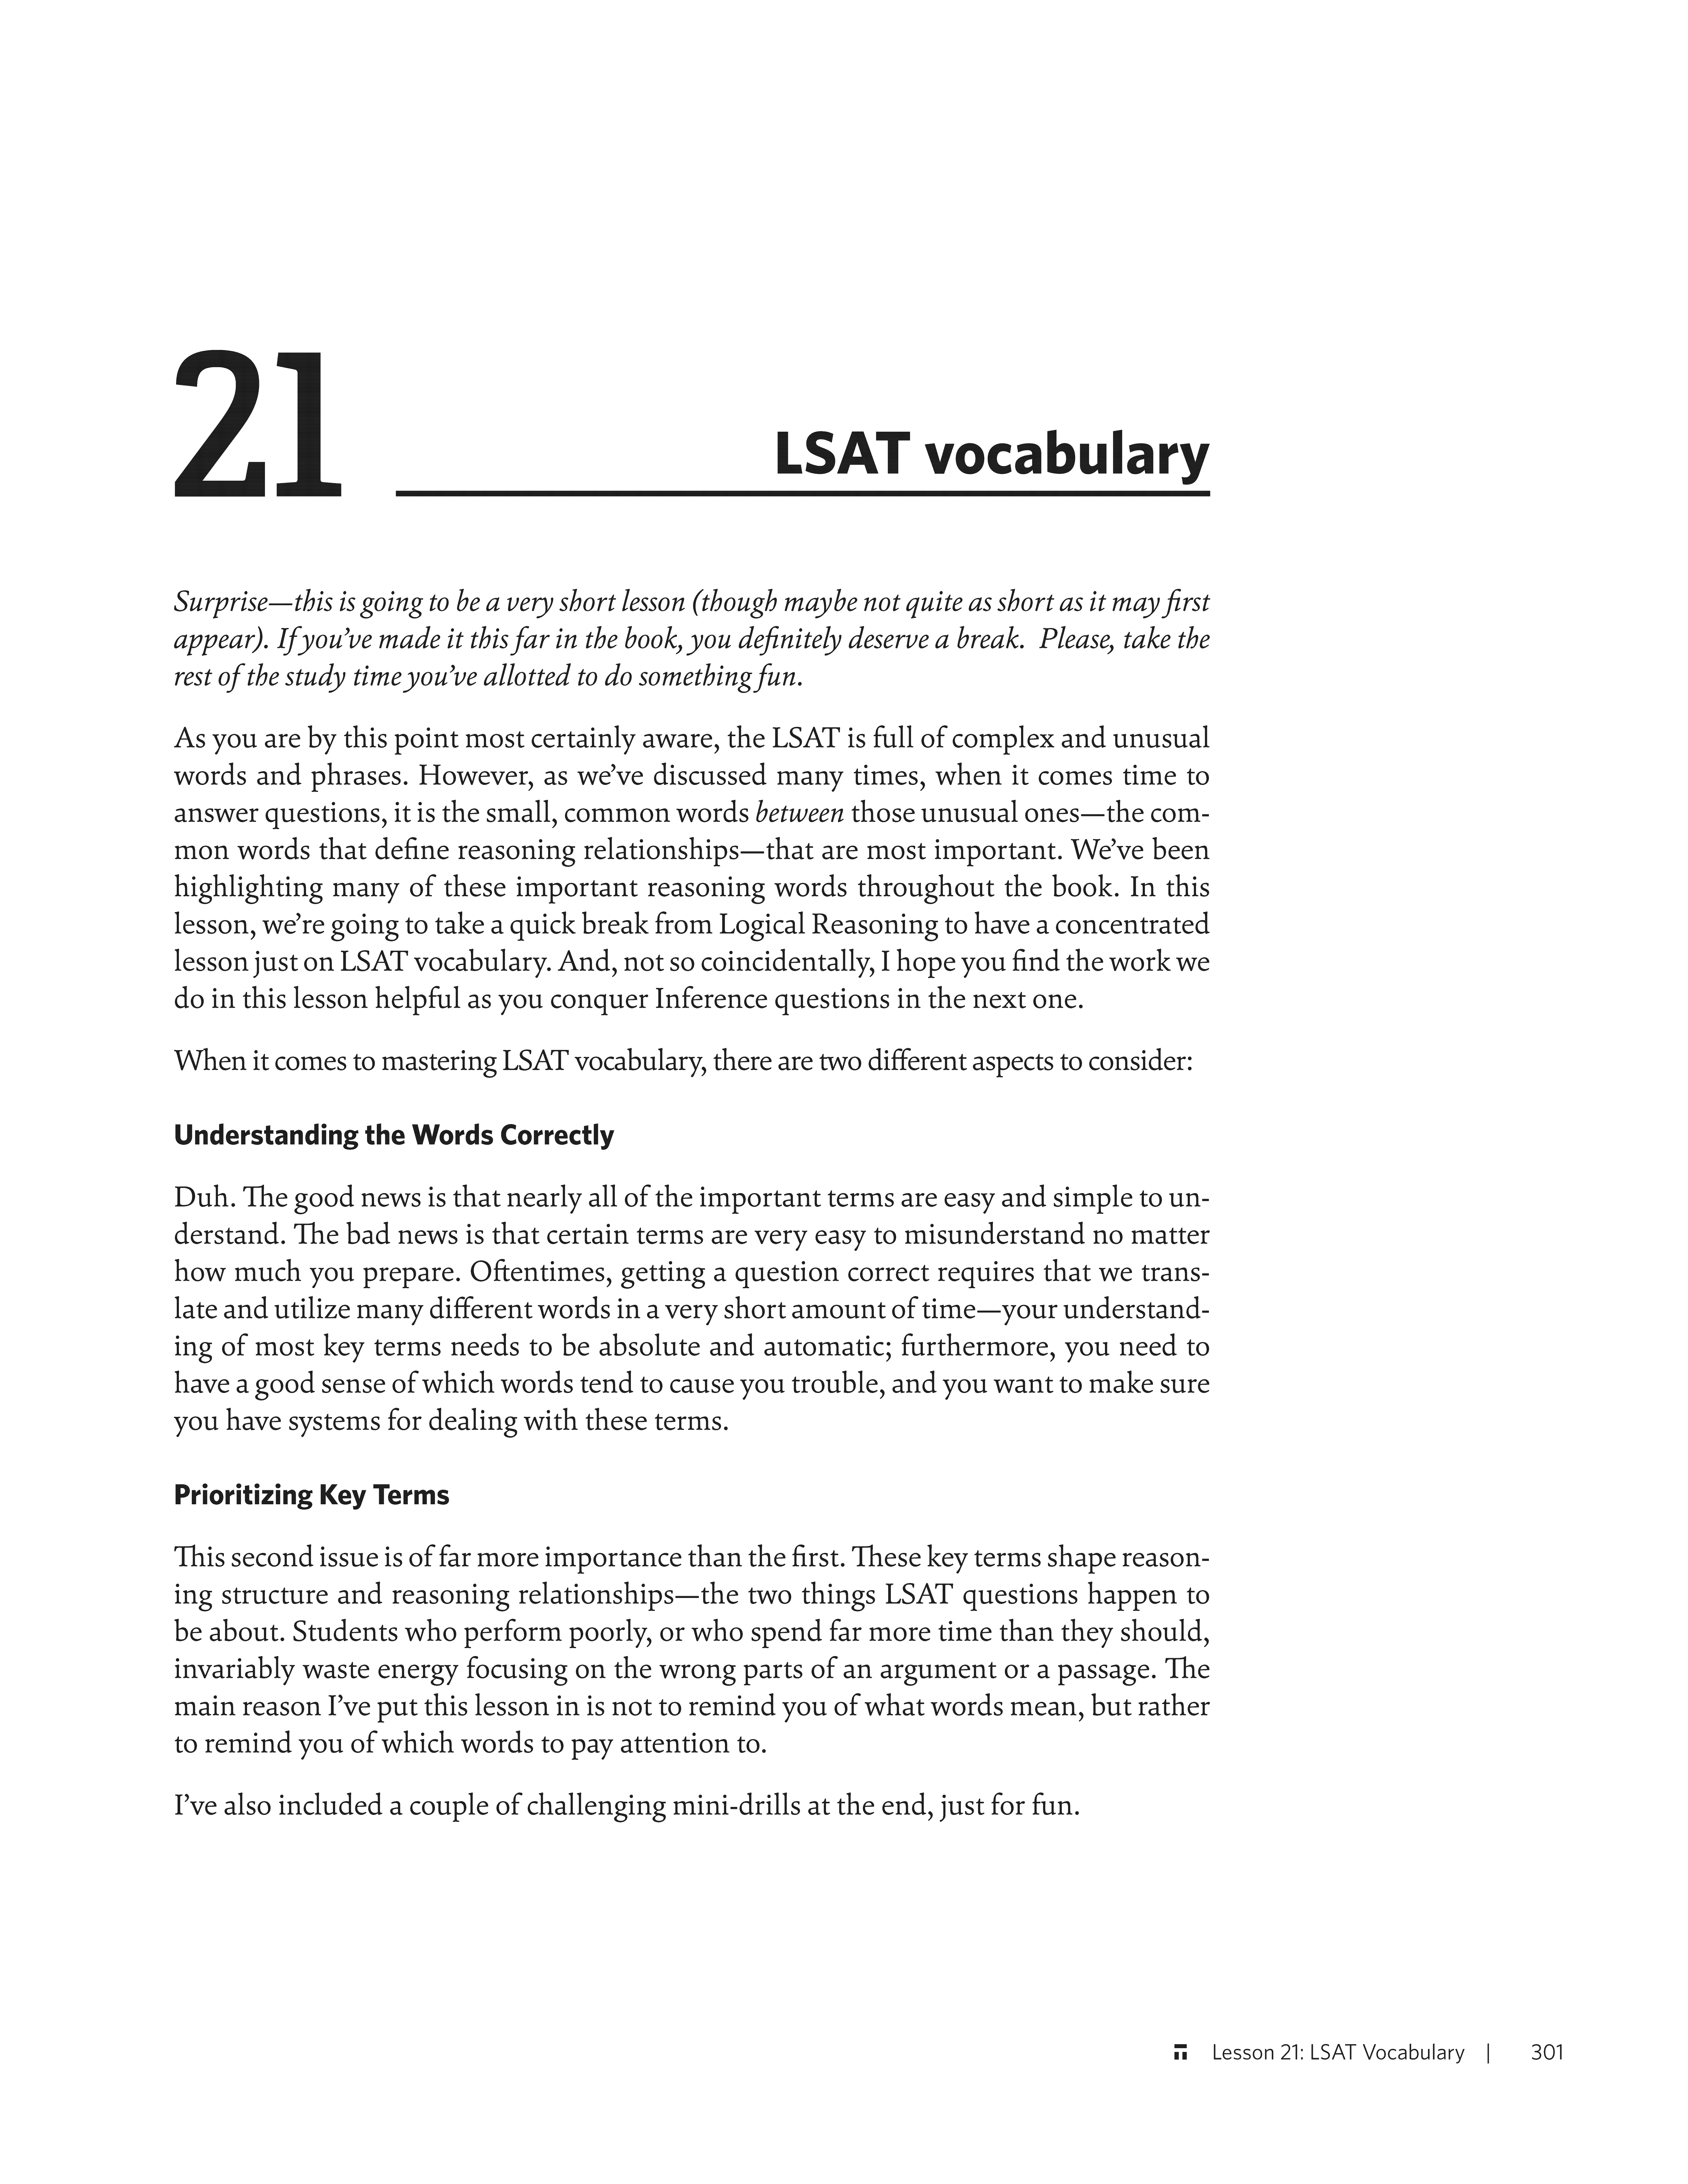 21. LSAT Vocabulary